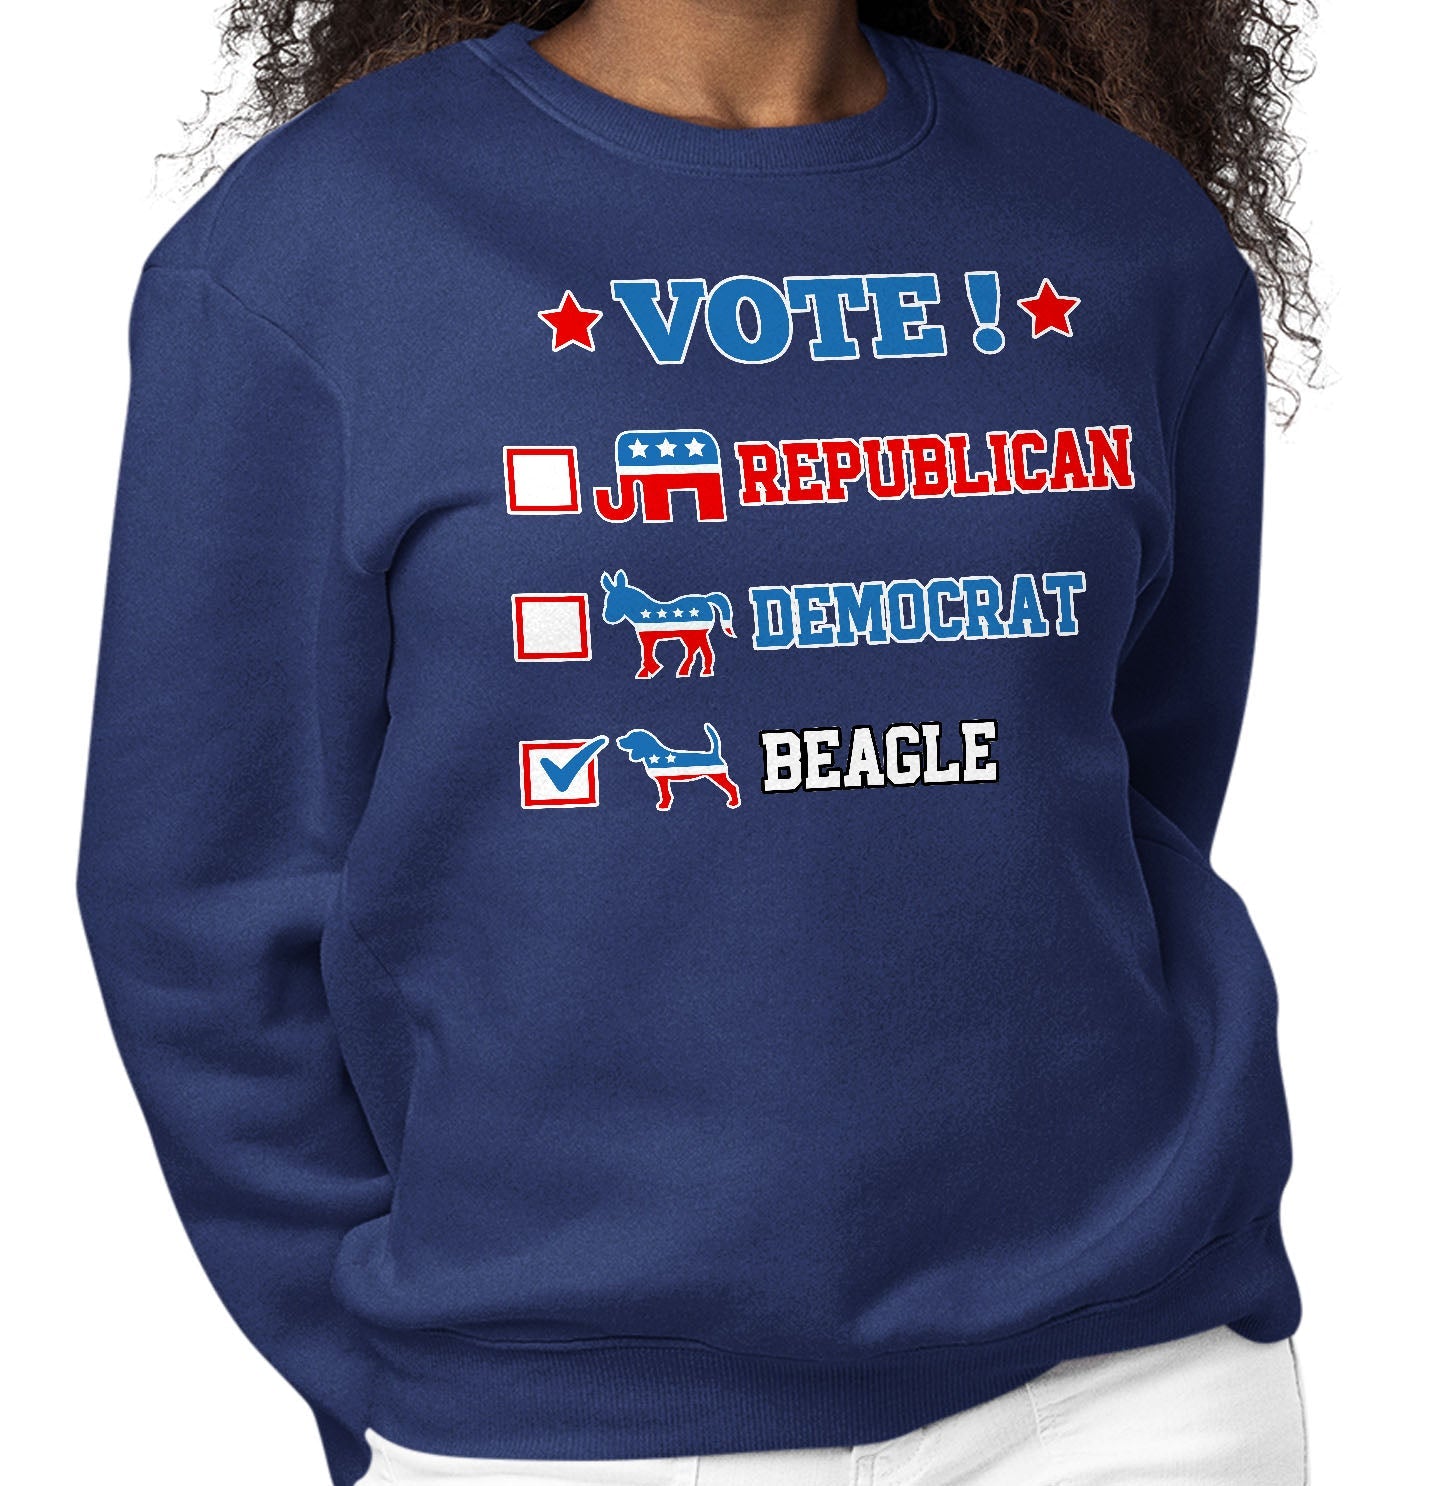 Vote for the Beagle - Adult Unisex Crewneck Sweatshirt